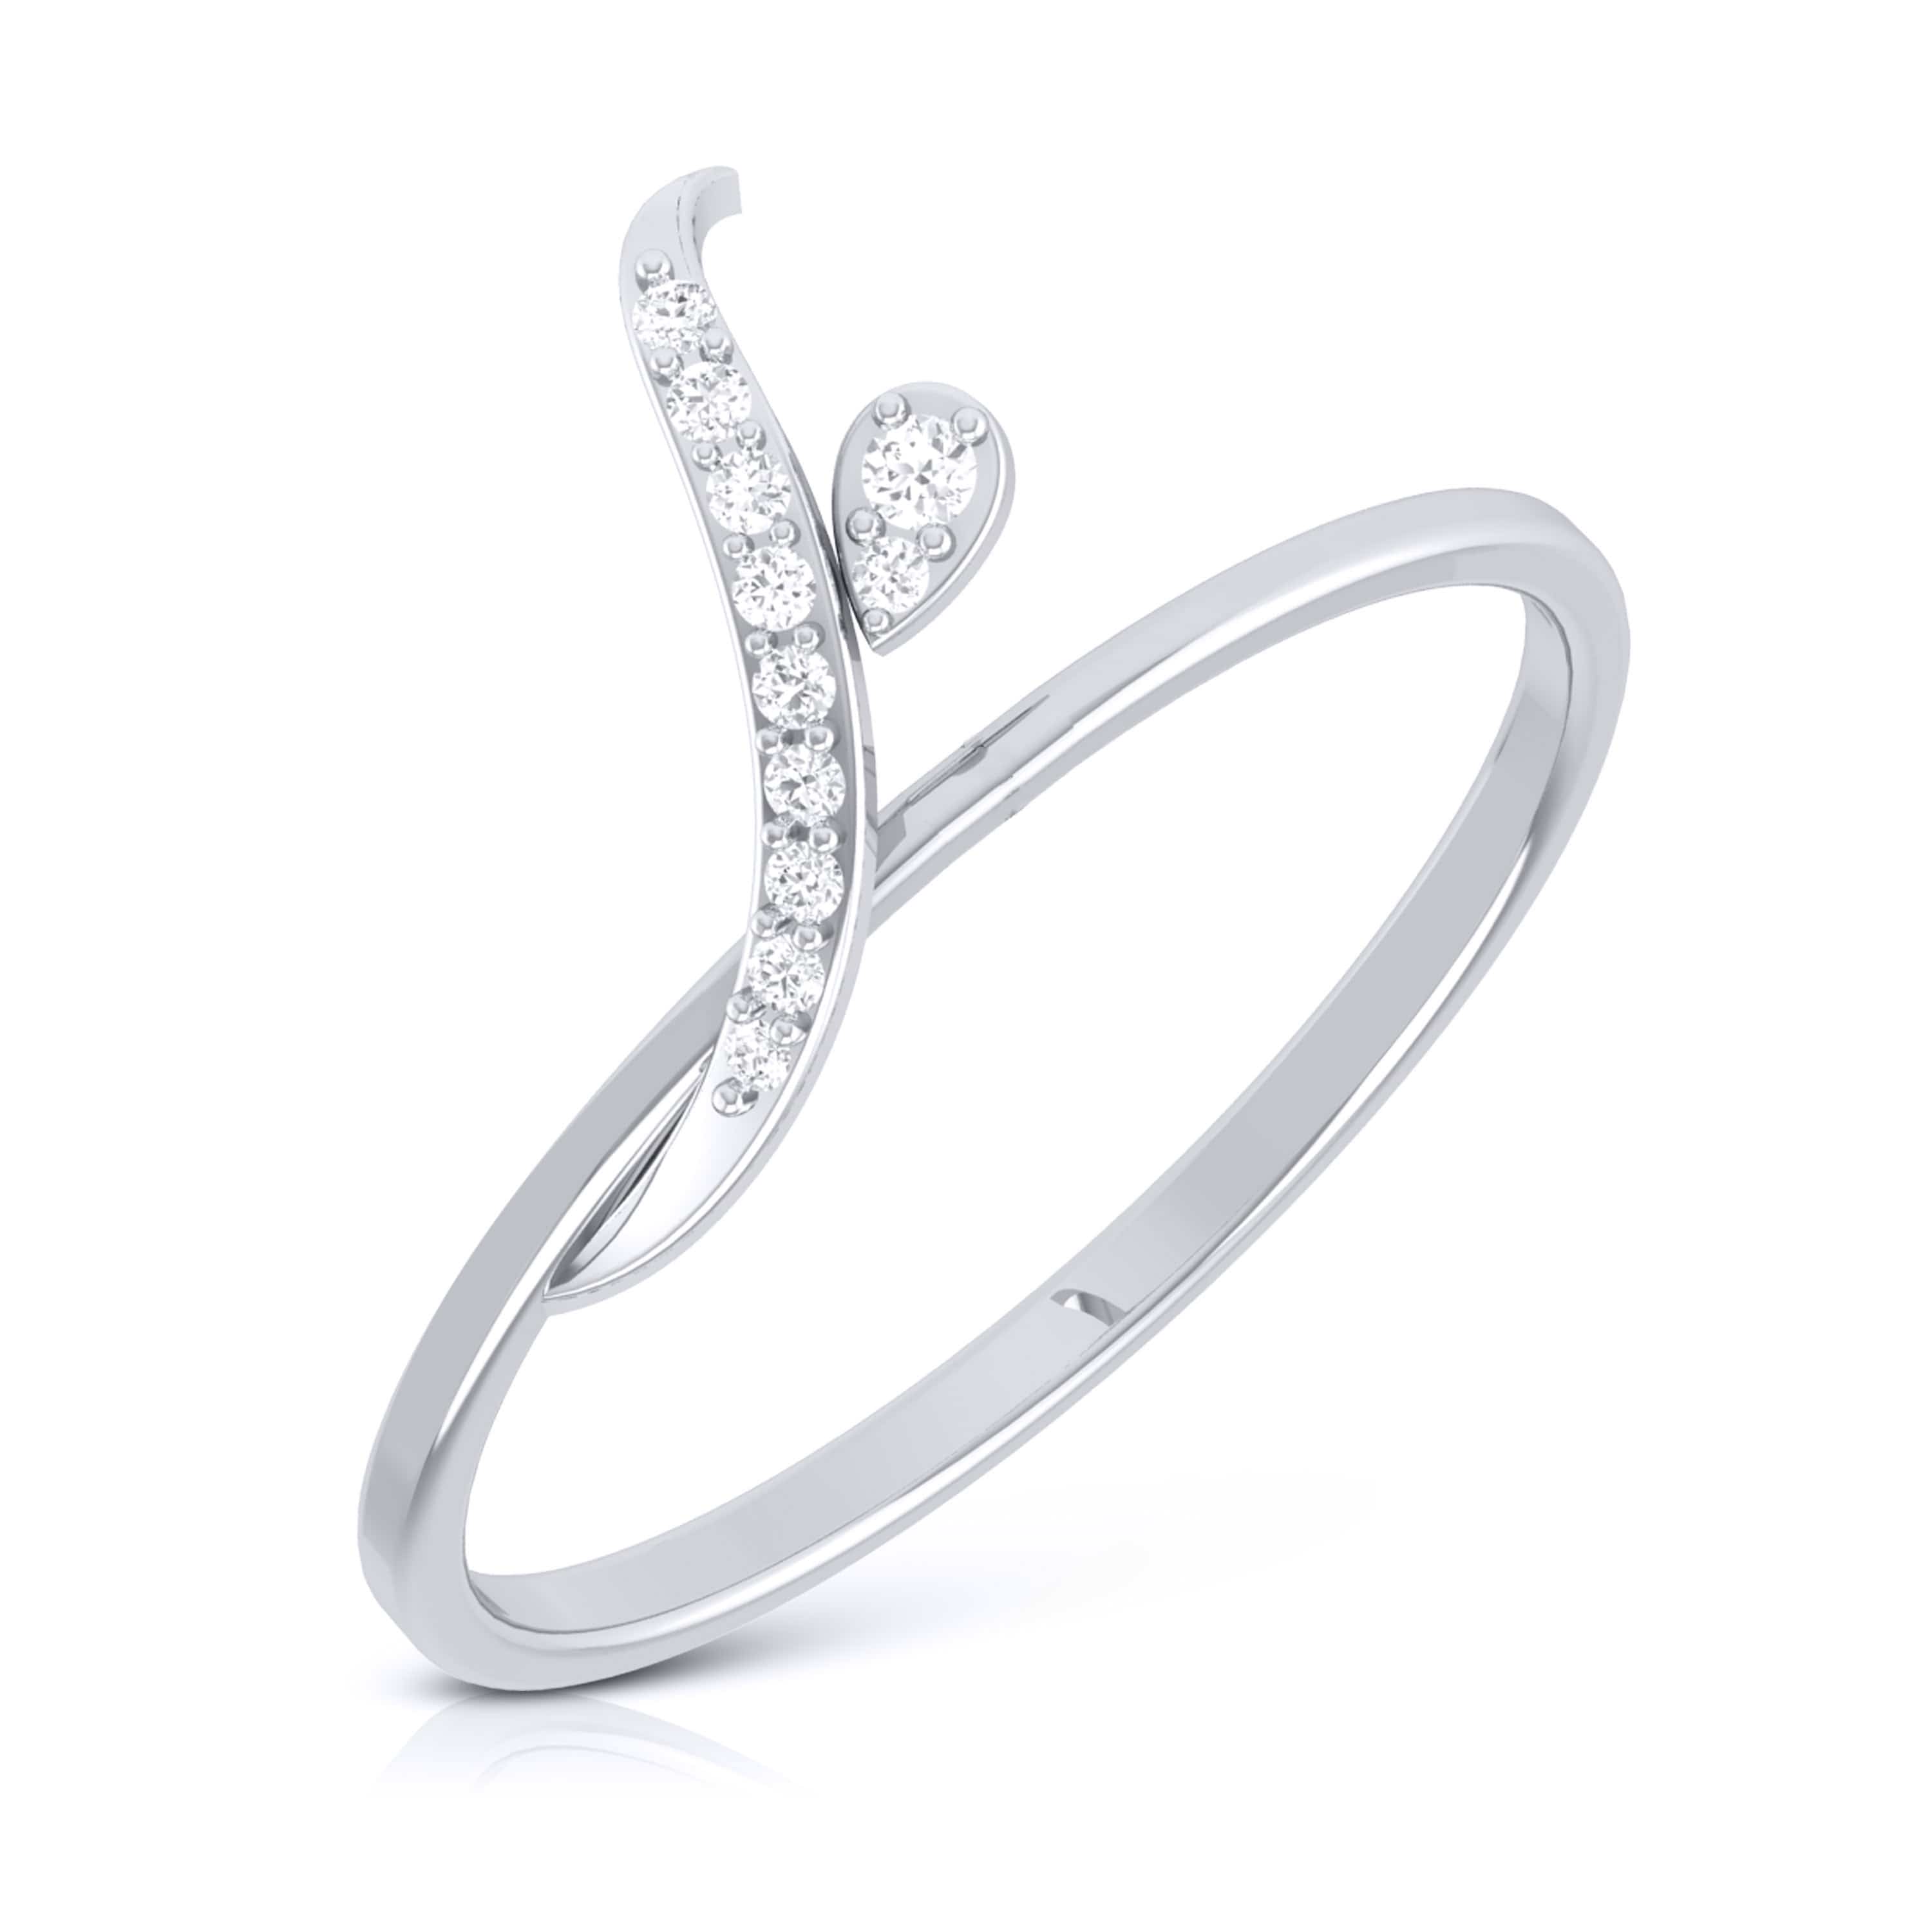 Rings rings rings | Gold ring designs, Fashion rings, Indian jewellery  design earrings